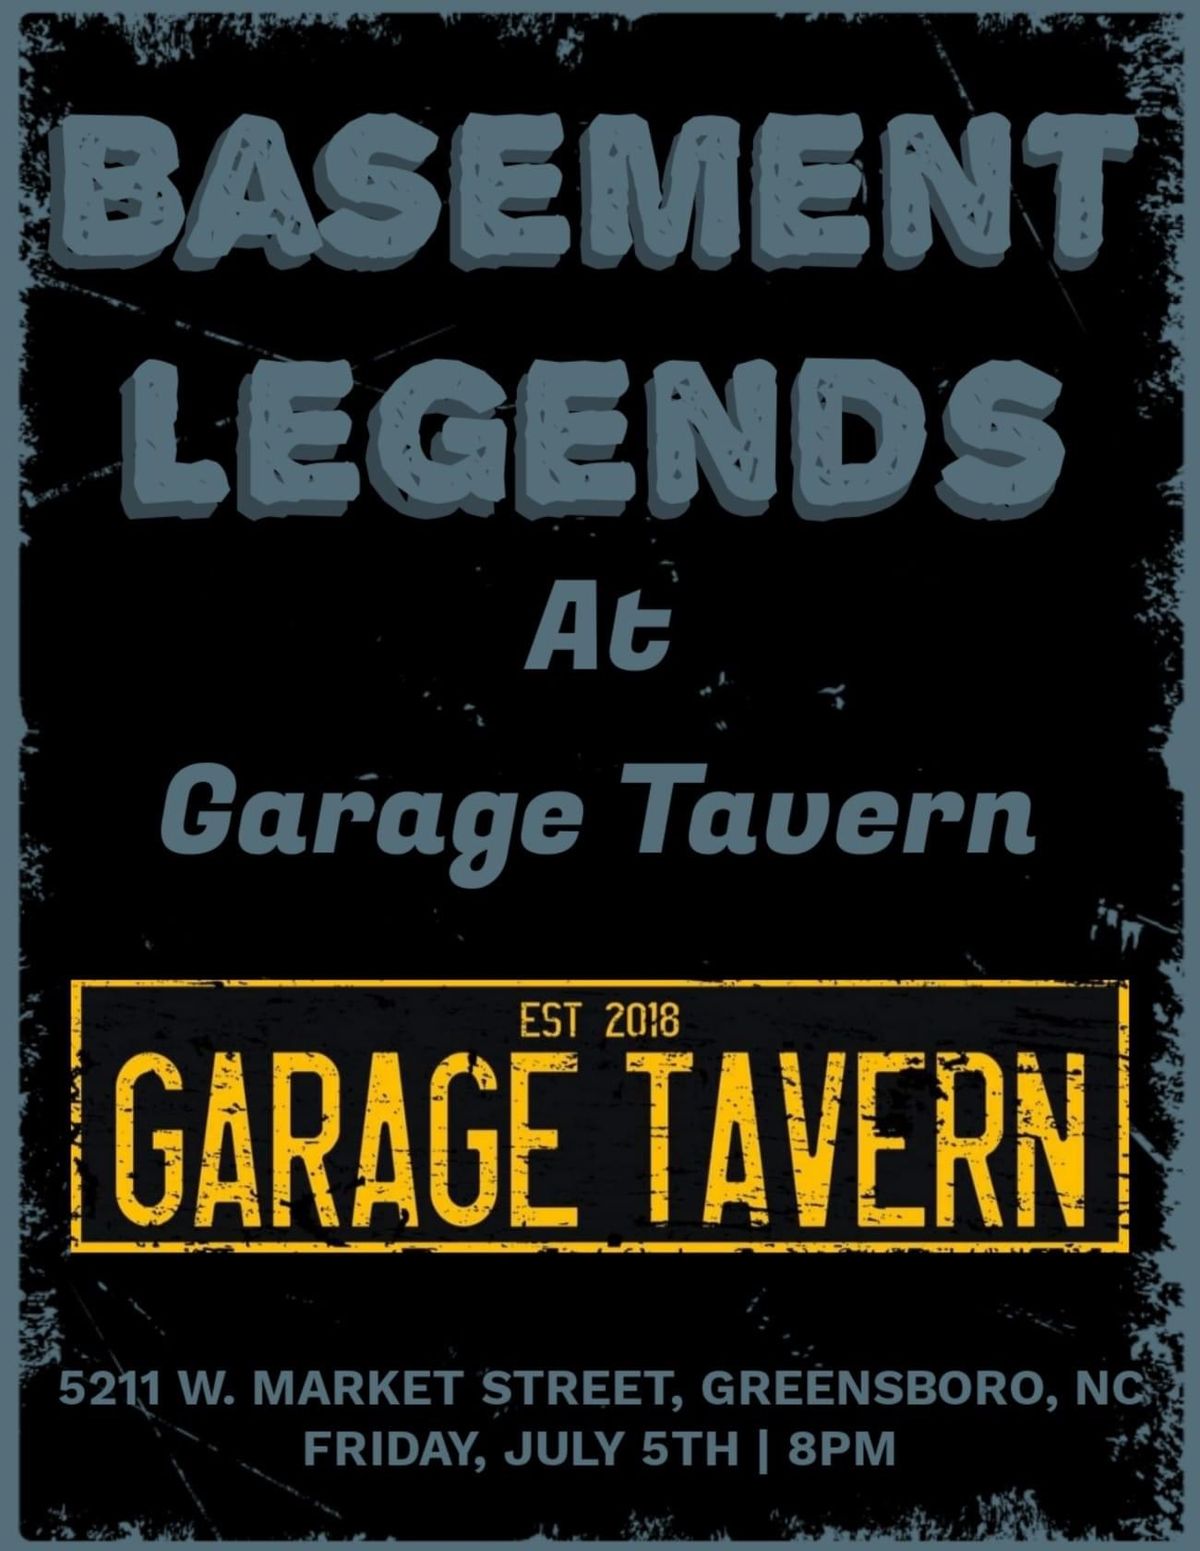 Basement Legends Band @ Garage Tavern